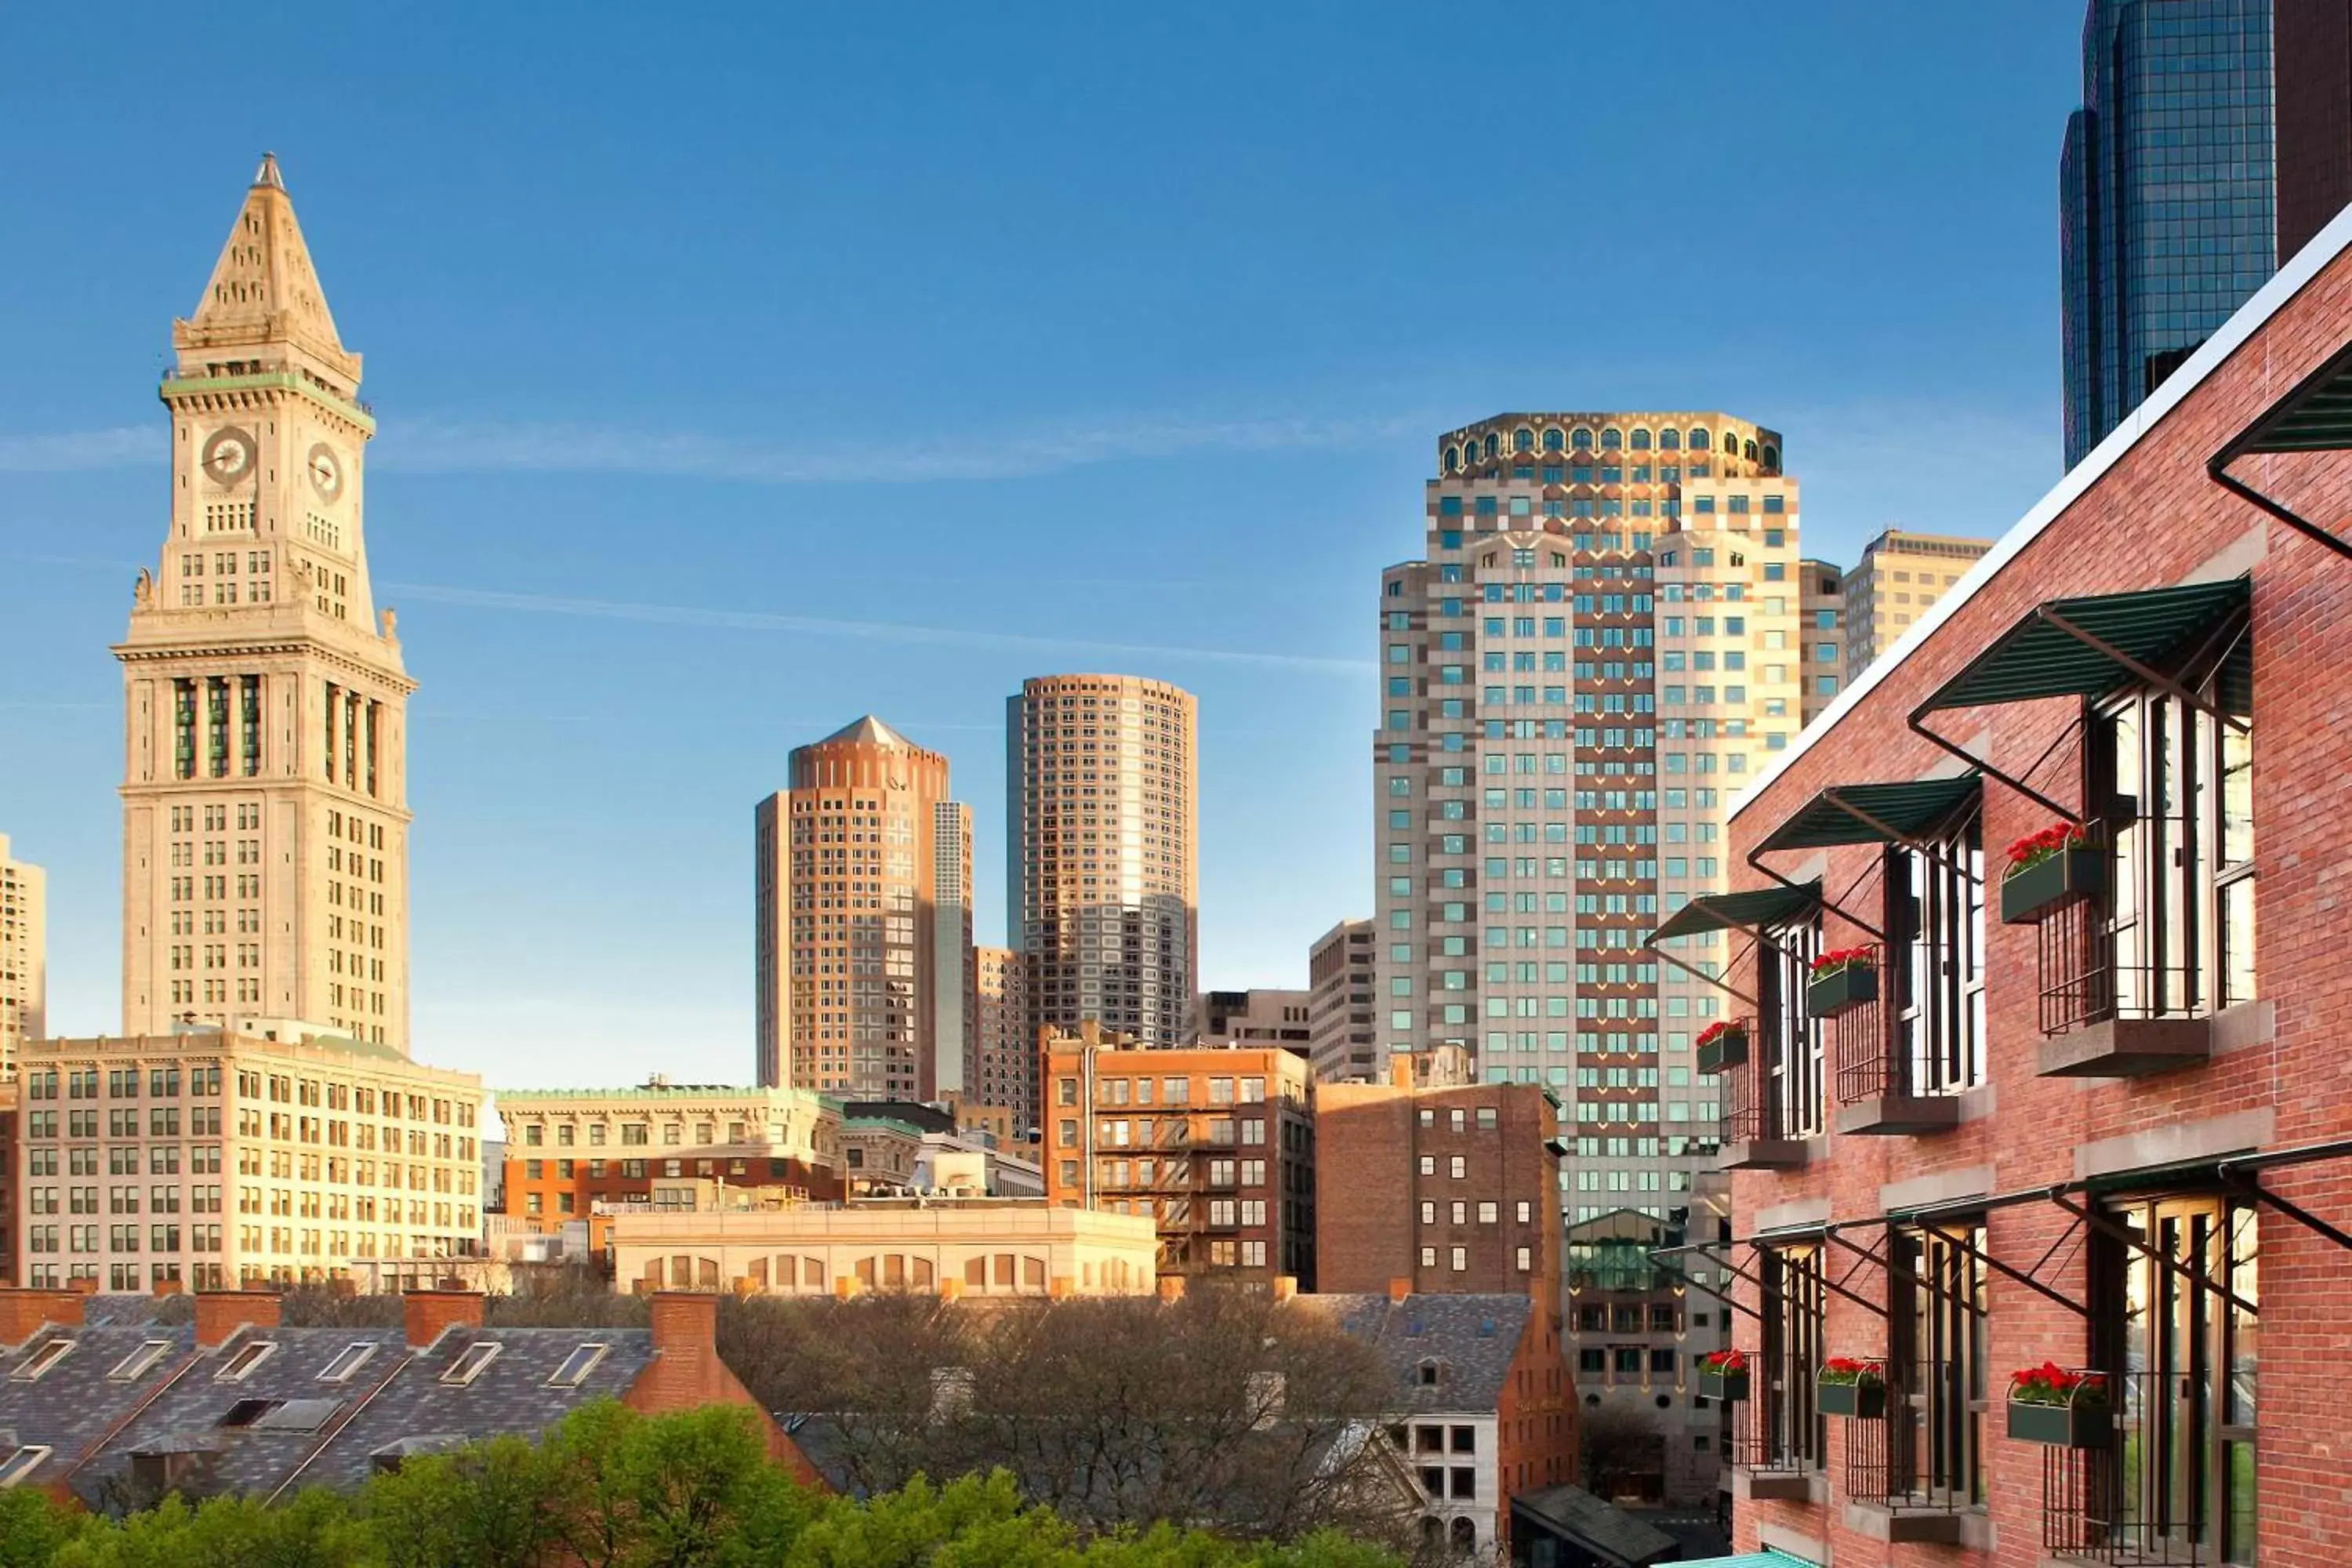 City view in The Bostonian Boston